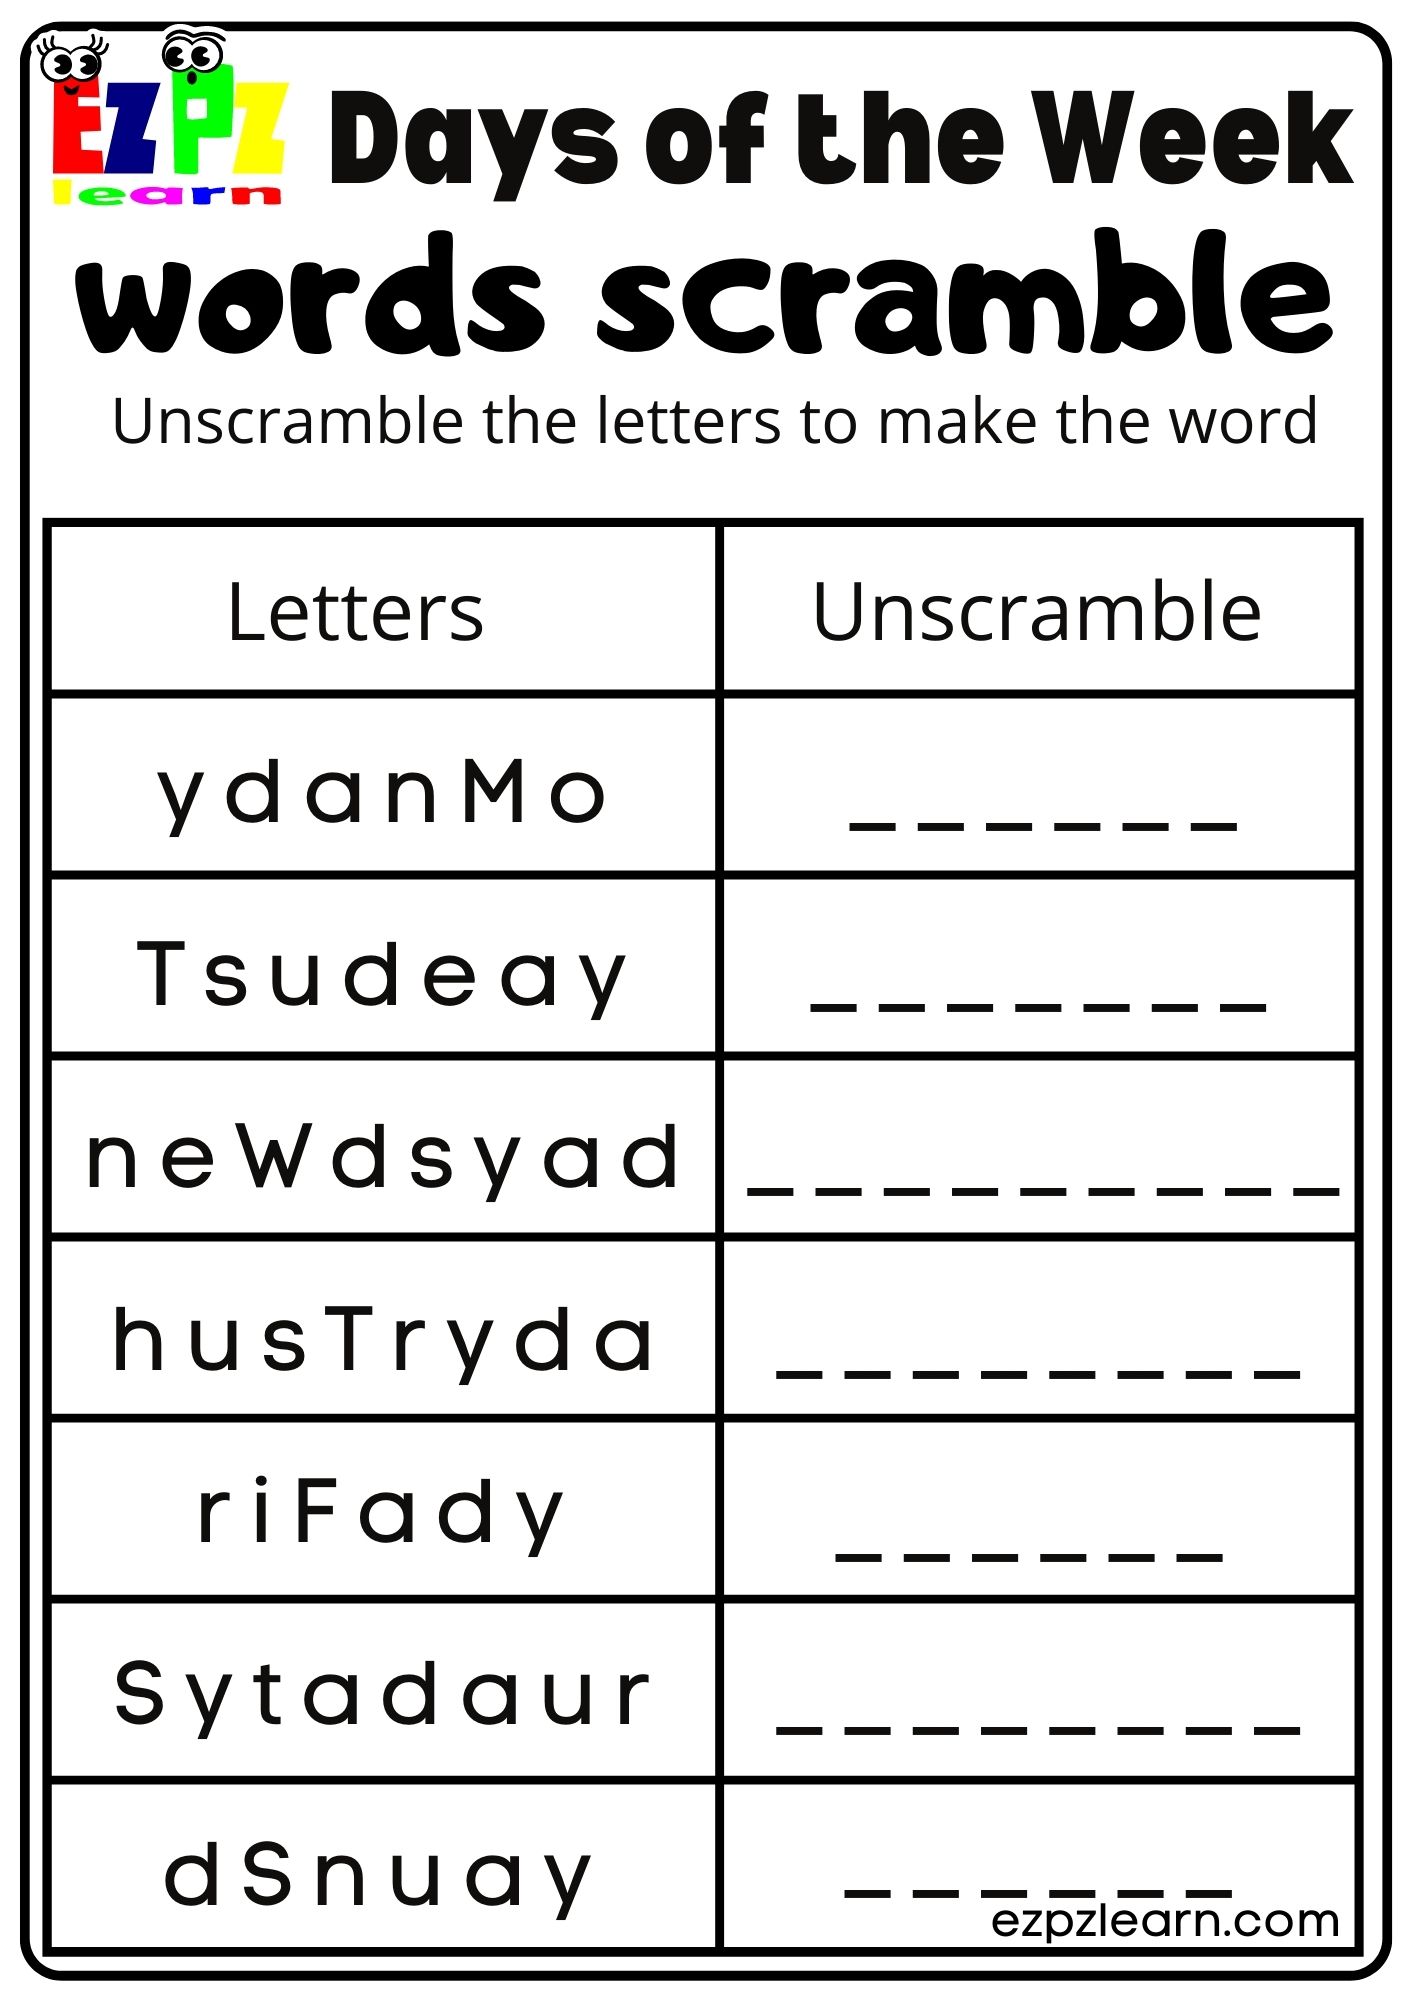 word-scramble-days-of-the-week-kids-activity-ezpzlearn